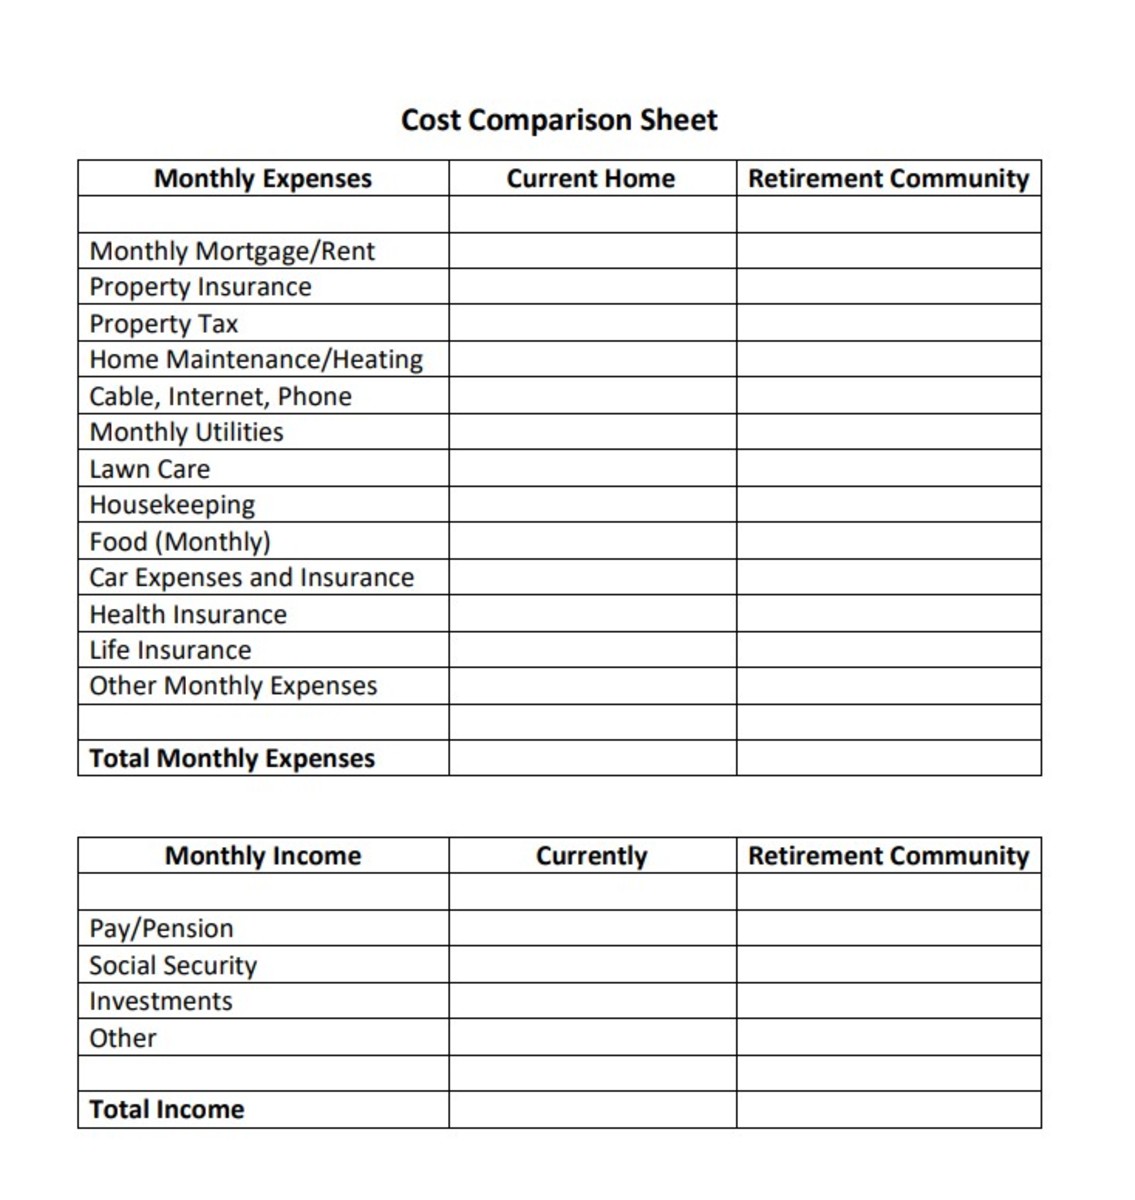 Cost Comparison Sheet